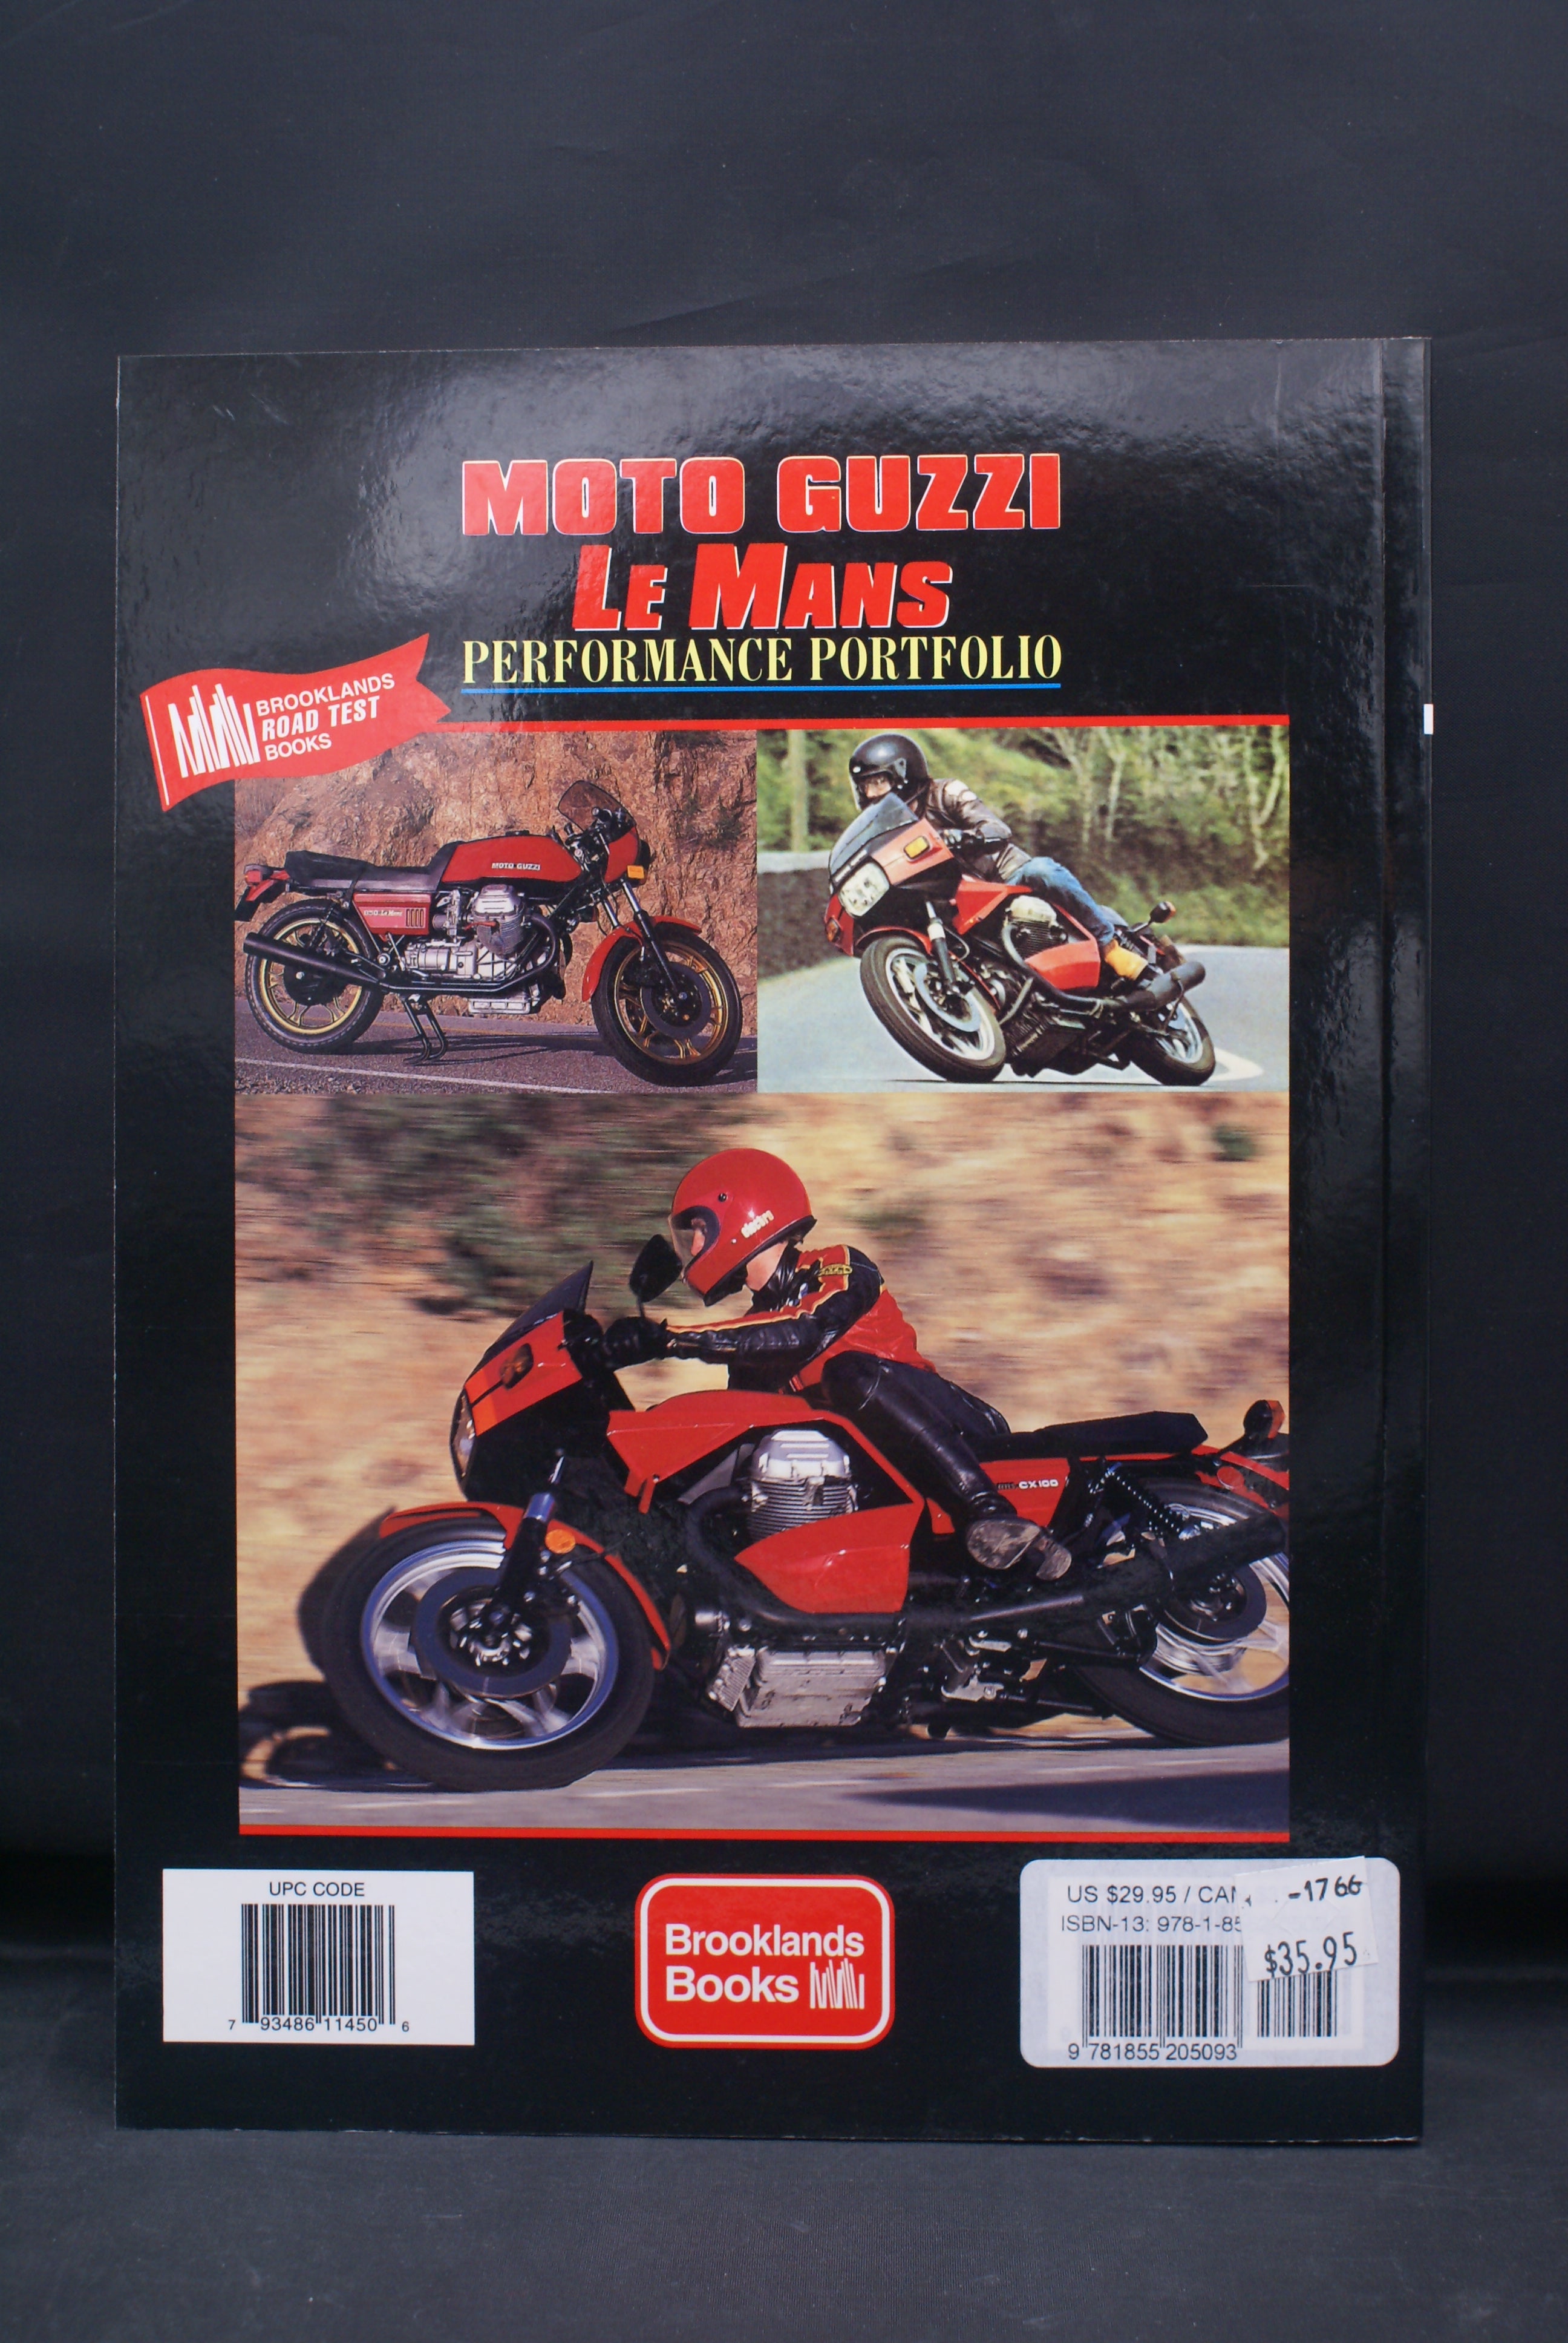 Moto Guzzi Le Mans 1976-1989